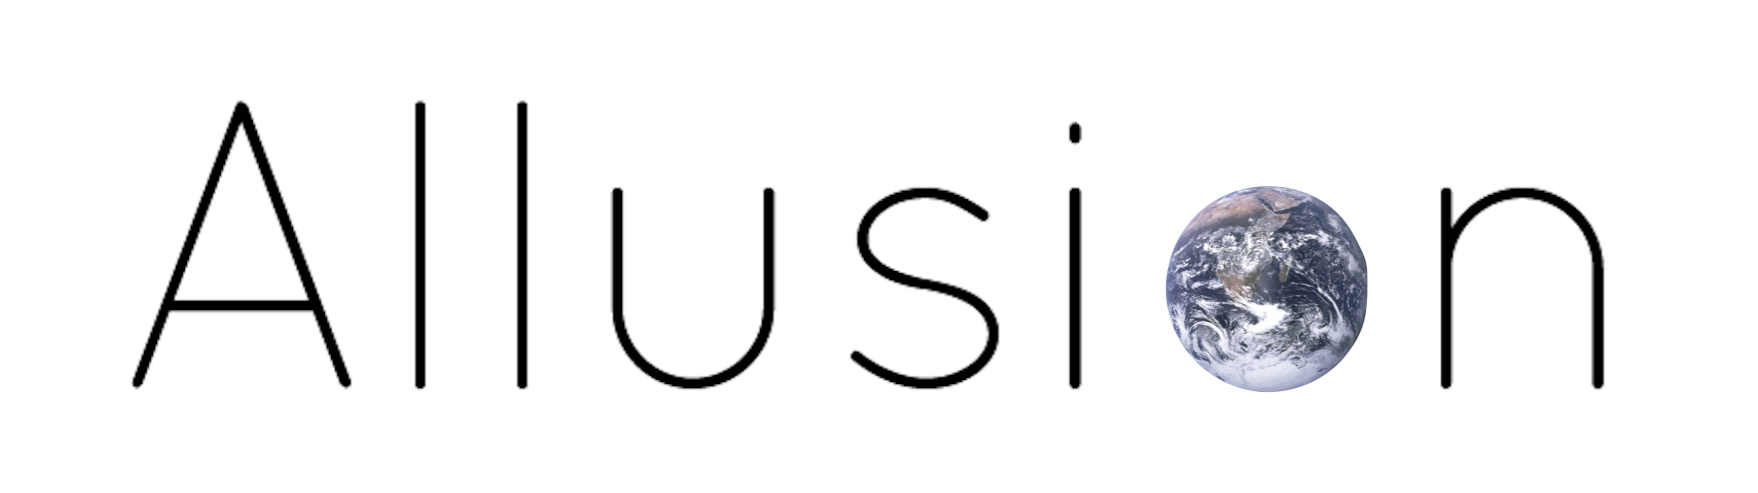 Allusion_3_2_logo